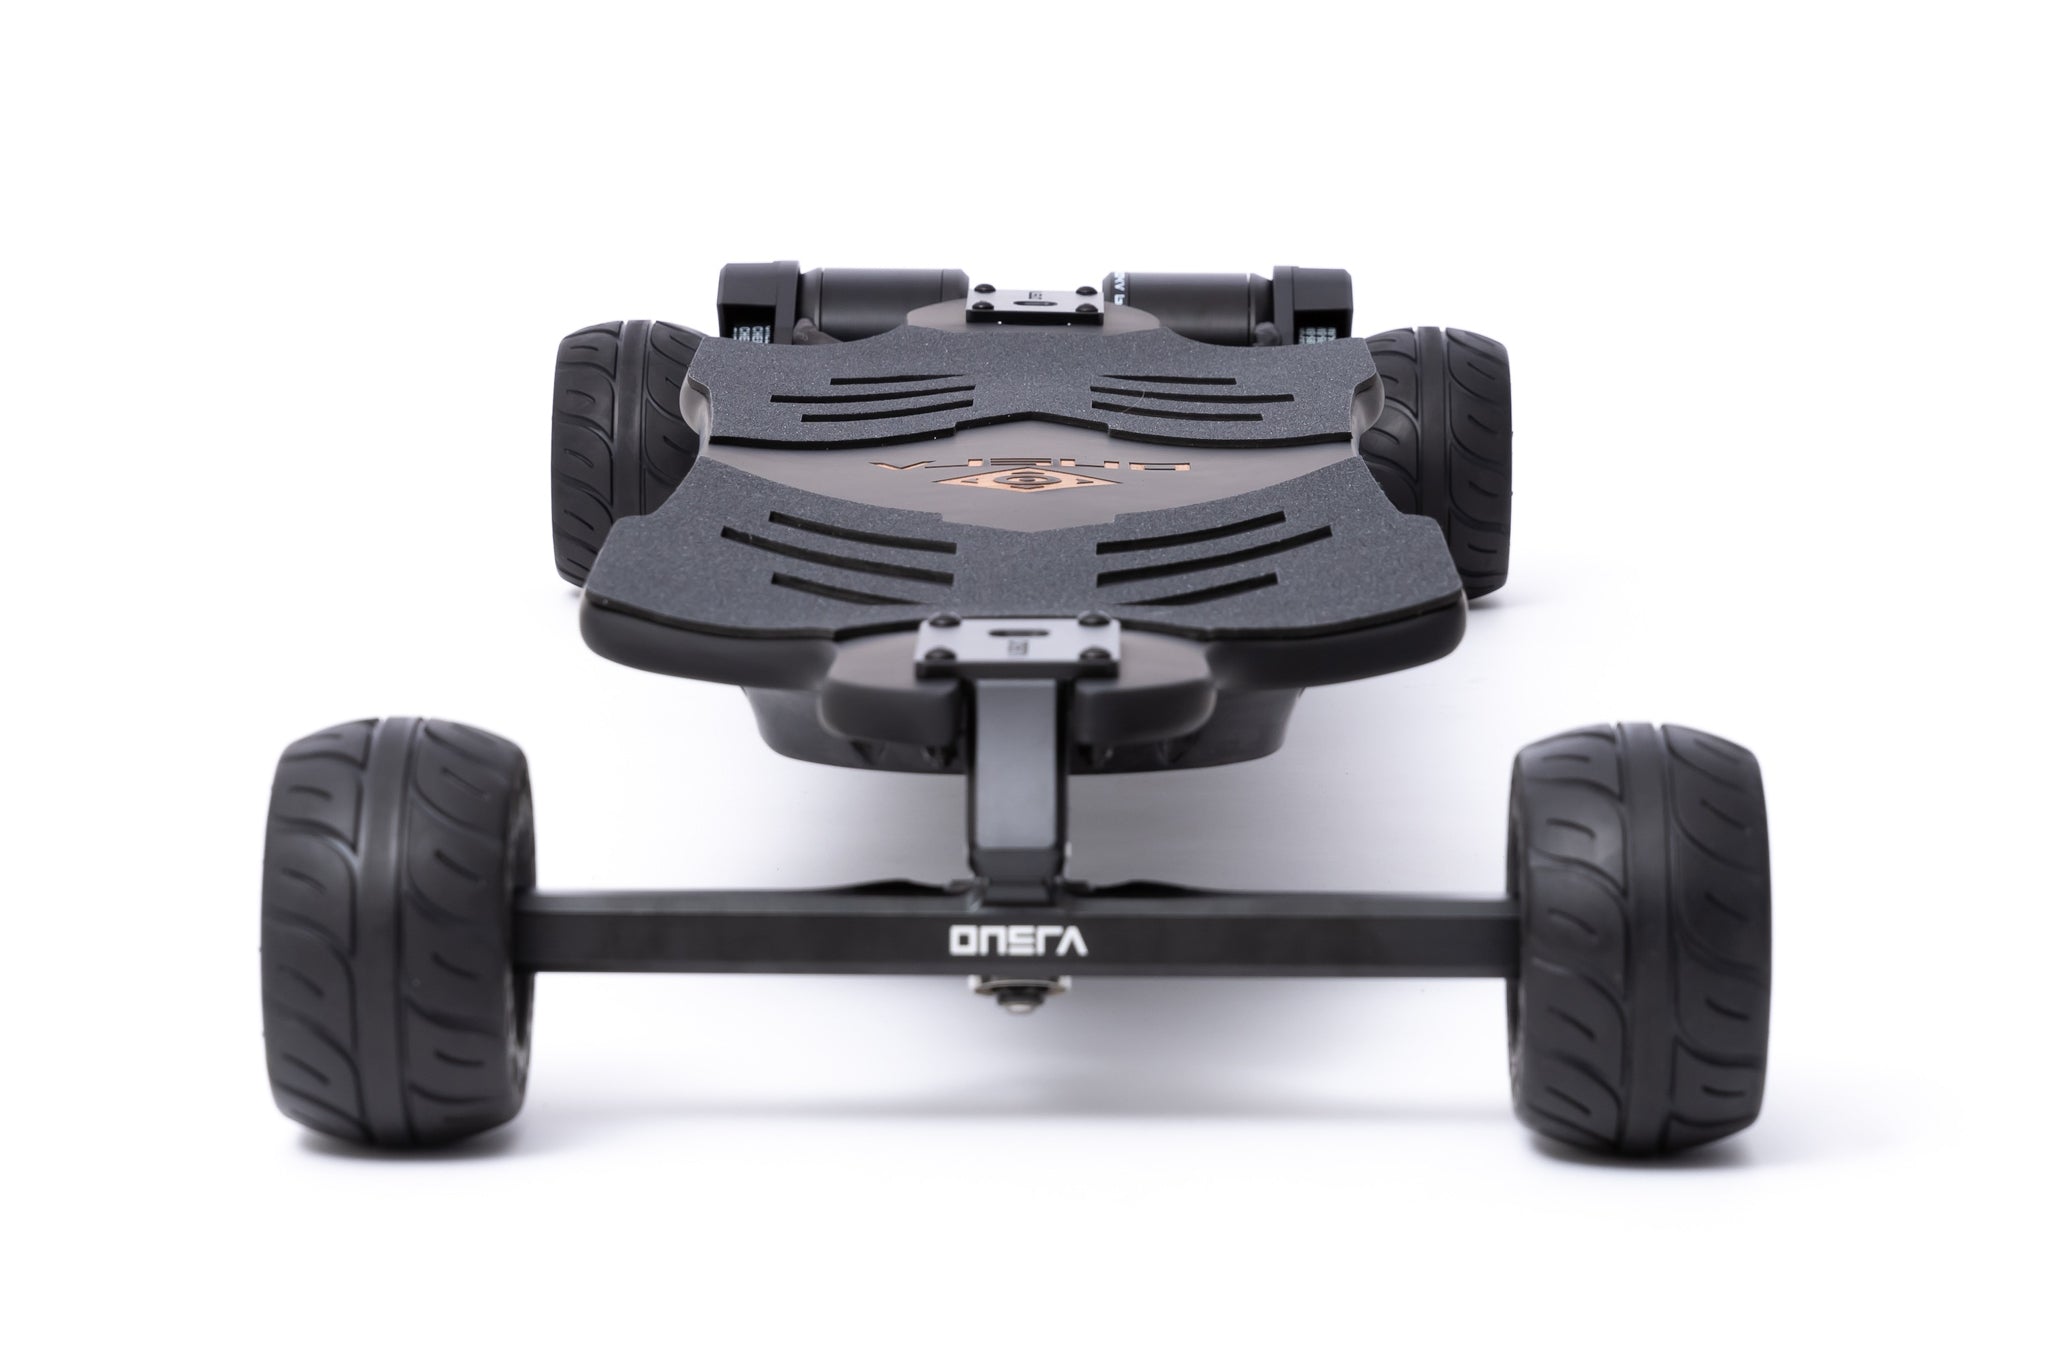 ONSRA Black Carve 3 PRO electric skateboard – Innovative, Lightweight, High-performance